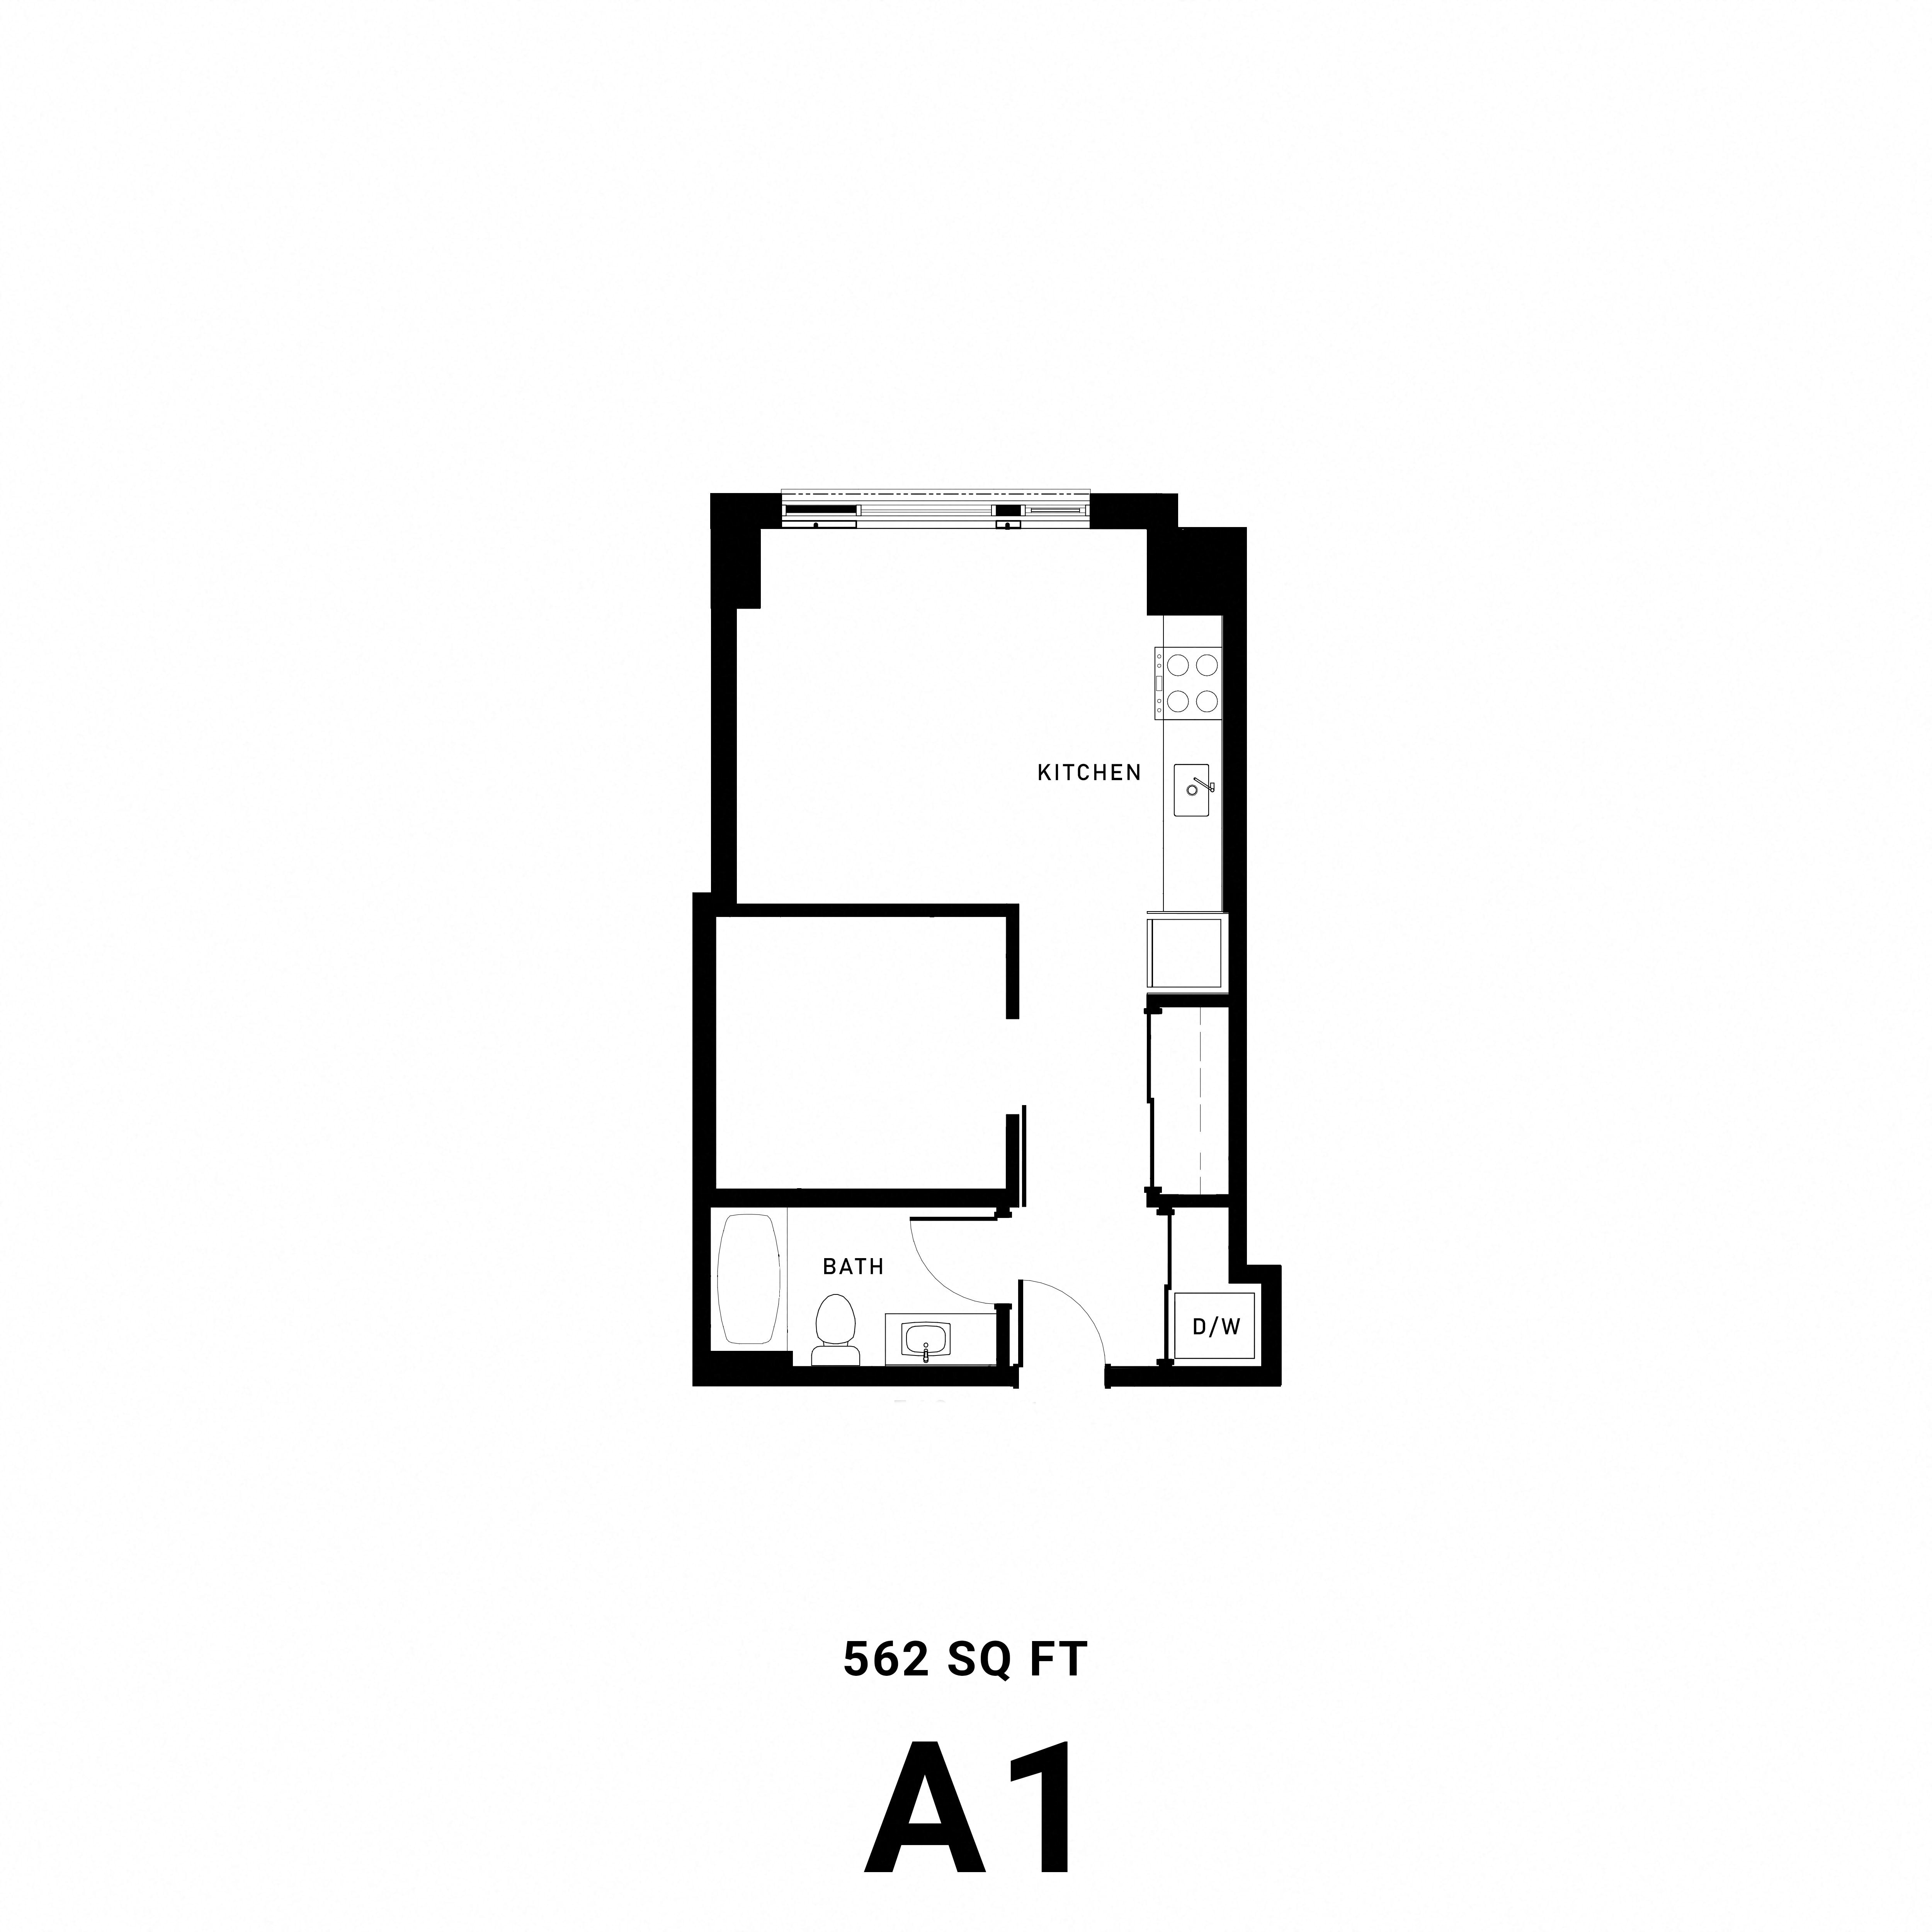 Floorplan A1